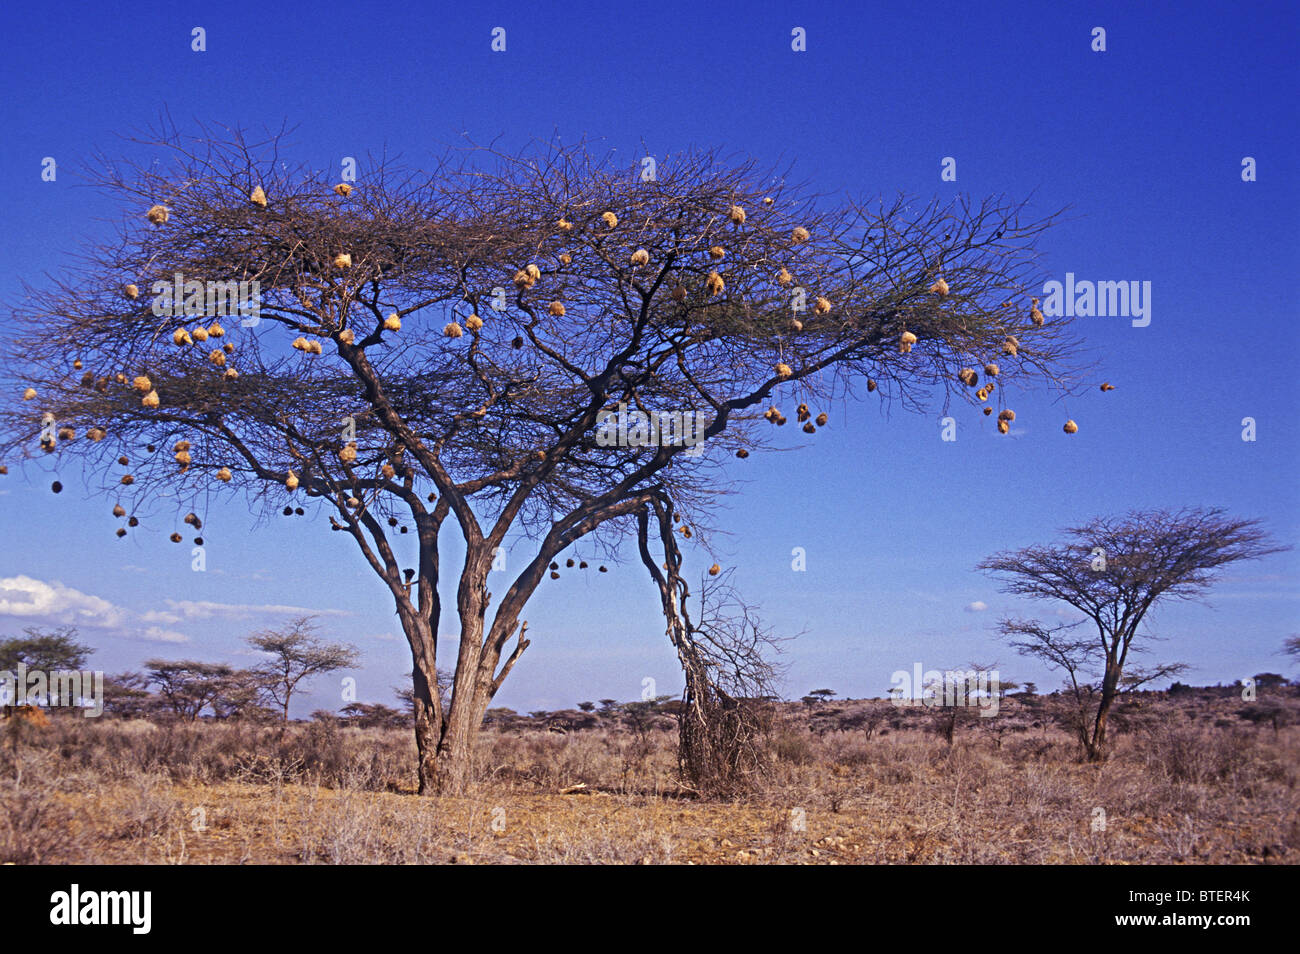 Acacia Tortilis tree with nests of Weavers Samburu National Reserve Kenya East Africa Broken branches damaged by elephants Stock Photo